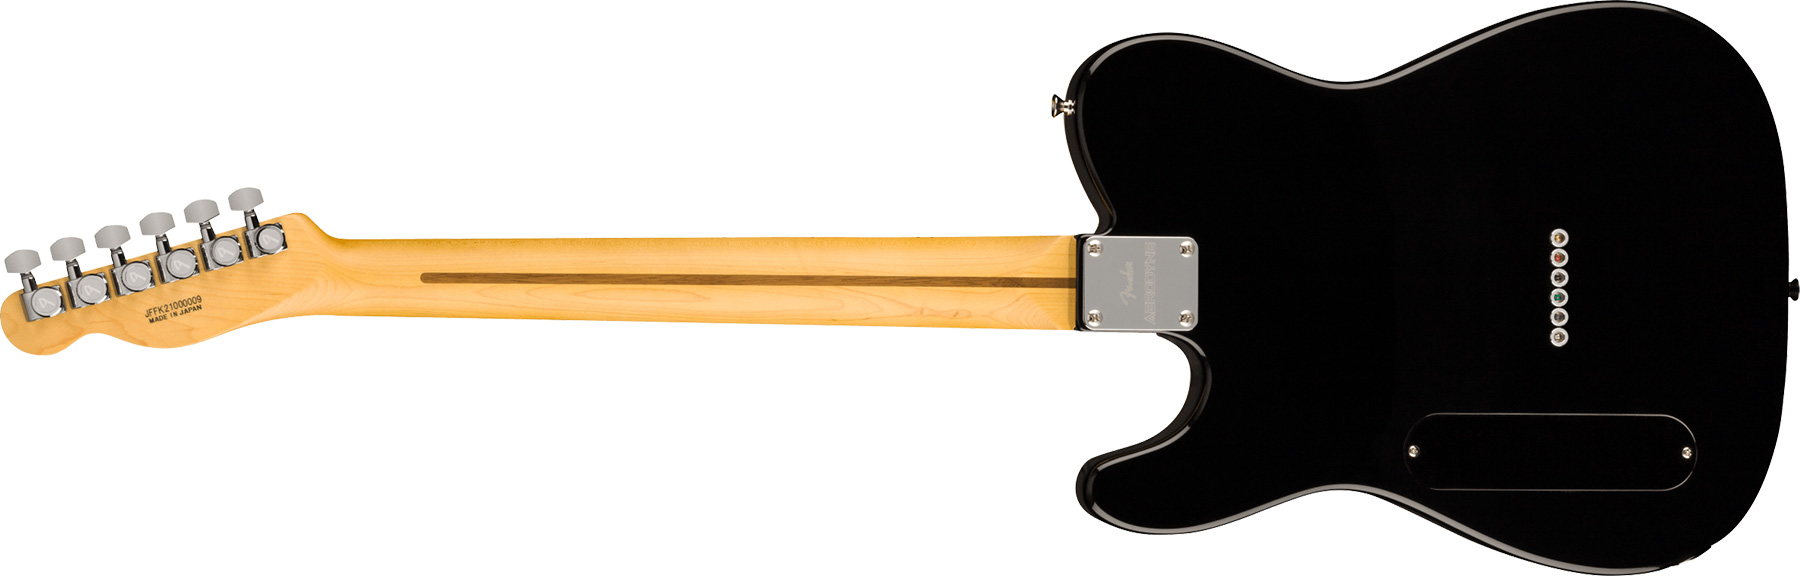 Fender Tele Aerodyne Special Jap 2s Ht Mn - Hot Rod Burst - Televorm elektrische gitaar - Variation 1